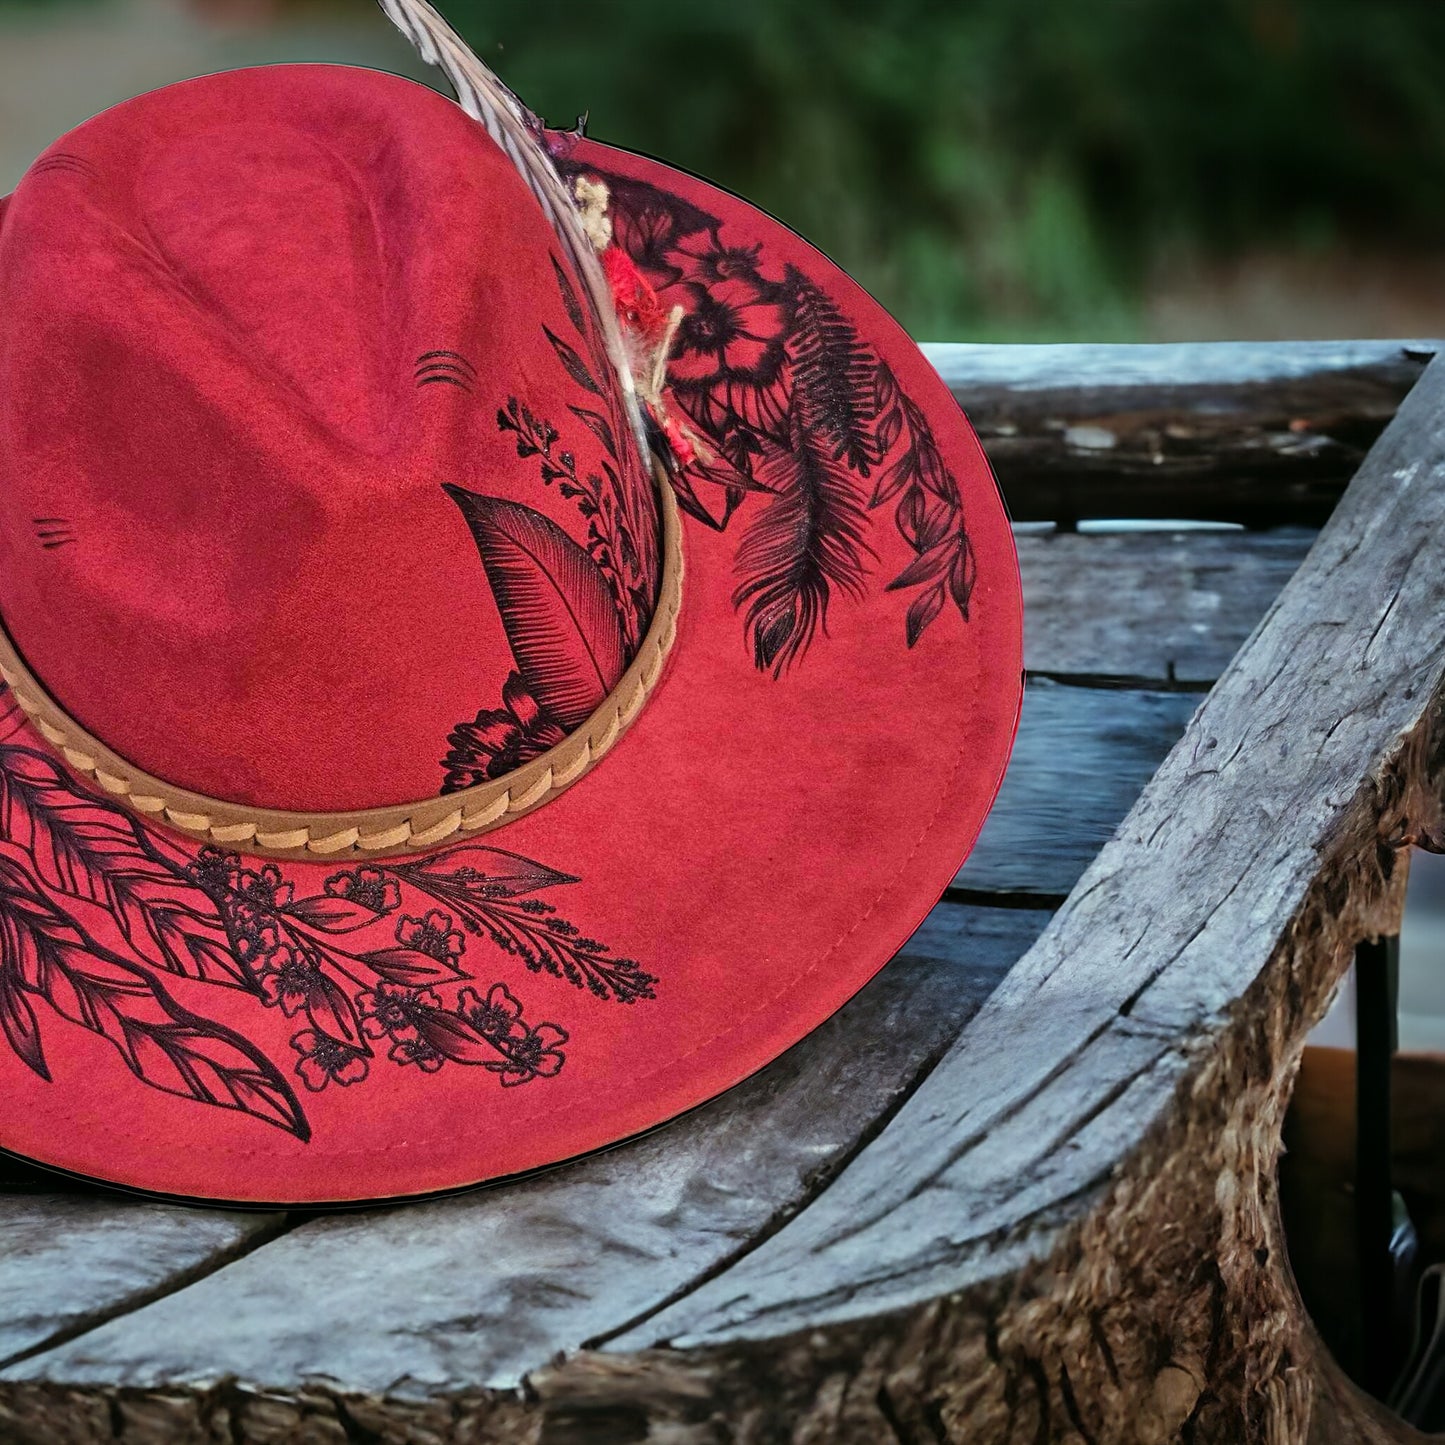 Cherry Petals - Burned Wide Hat